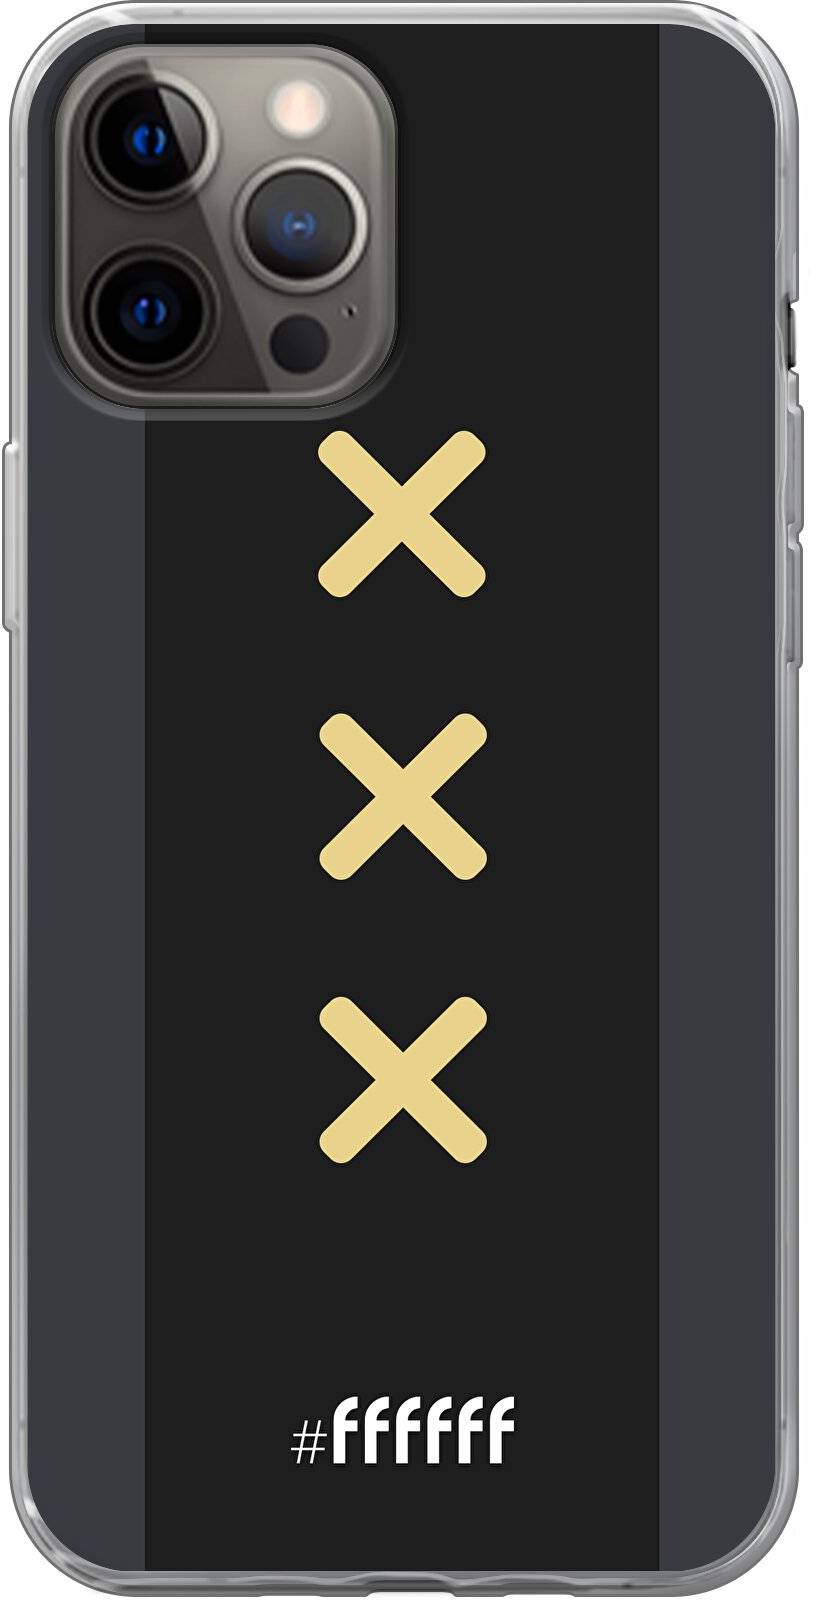 Ajax Europees Uitshirt 2020-2021 iPhone 12 Pro Max